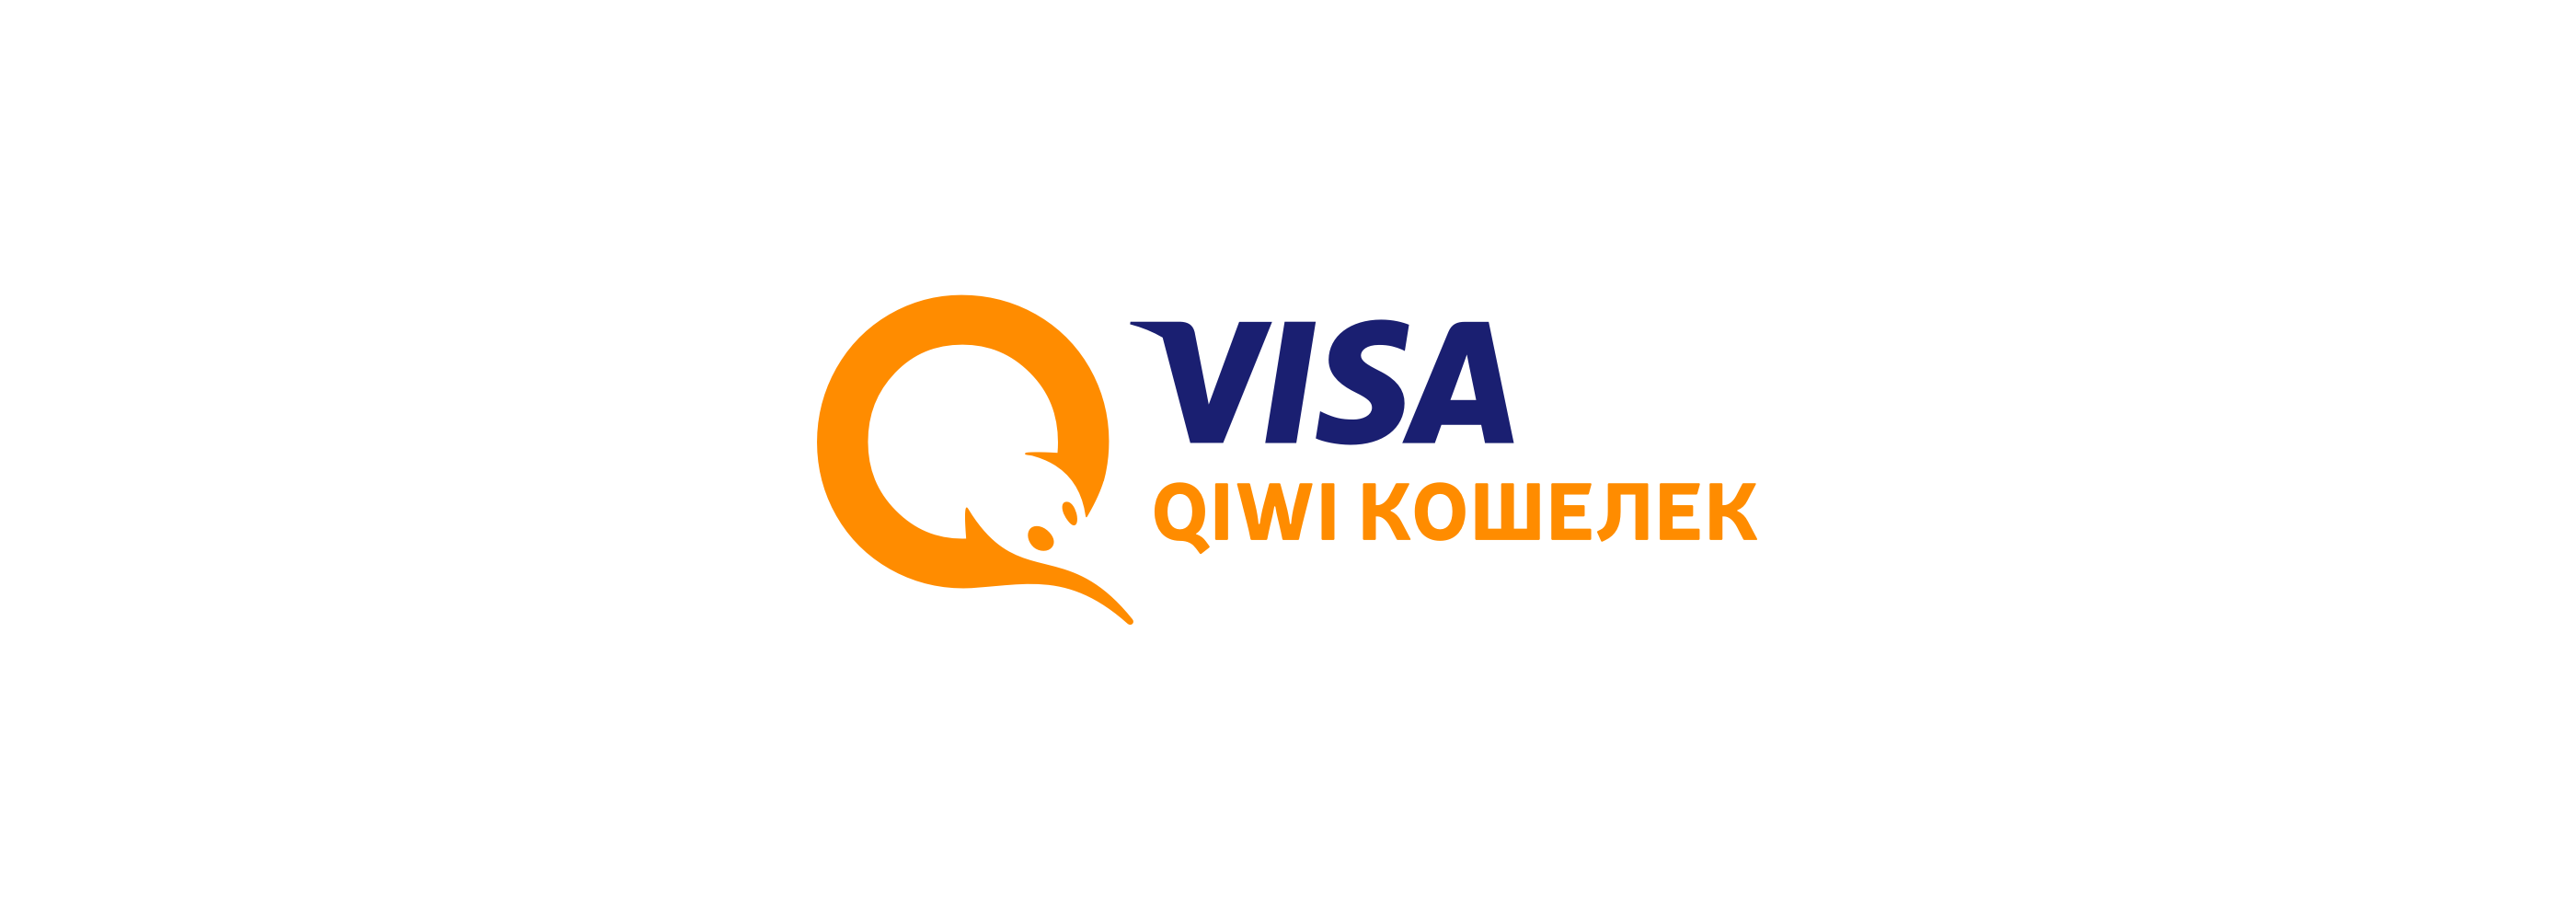 Киви кошелек. Платежная система QIWI. QIWI Wallet логотип. Ярлык киви кошелек. Visa qiwi